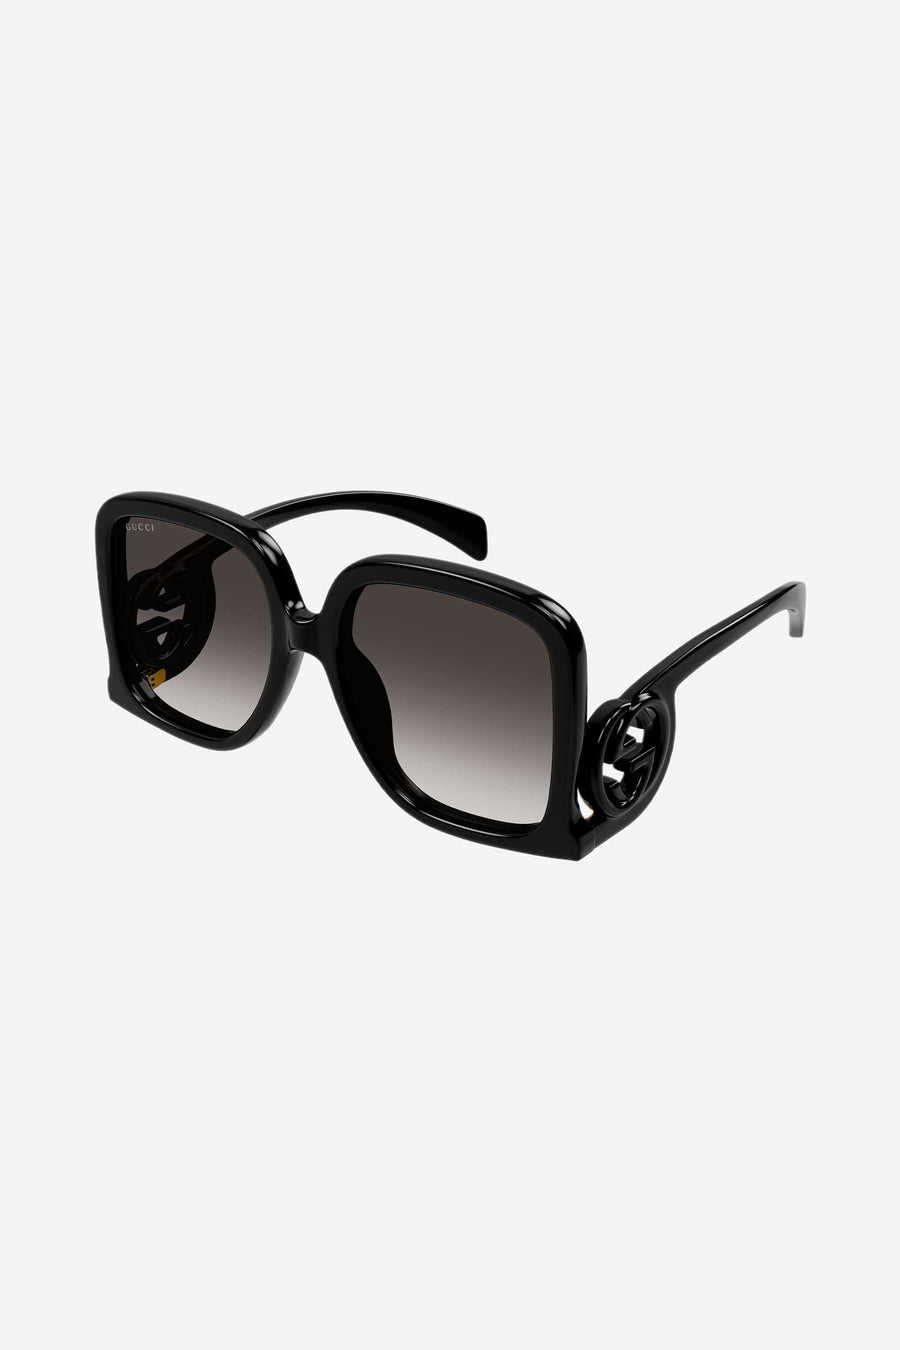 Gucci GG1326S black butterfly shape sunglasses